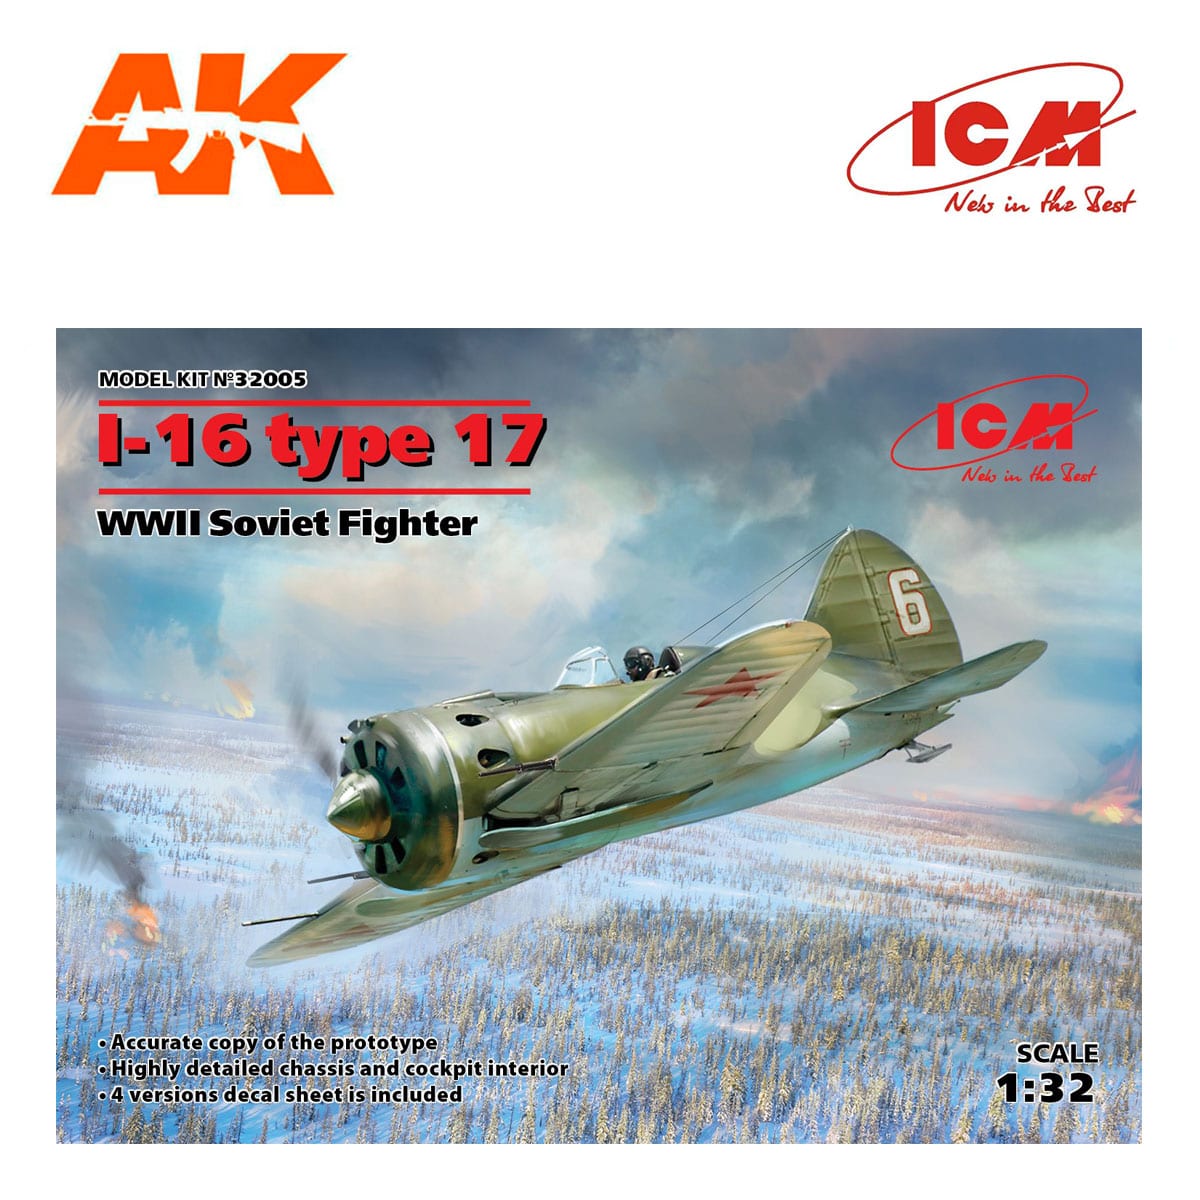 I-16 type 17, WWII Soviet Fighter 1/32